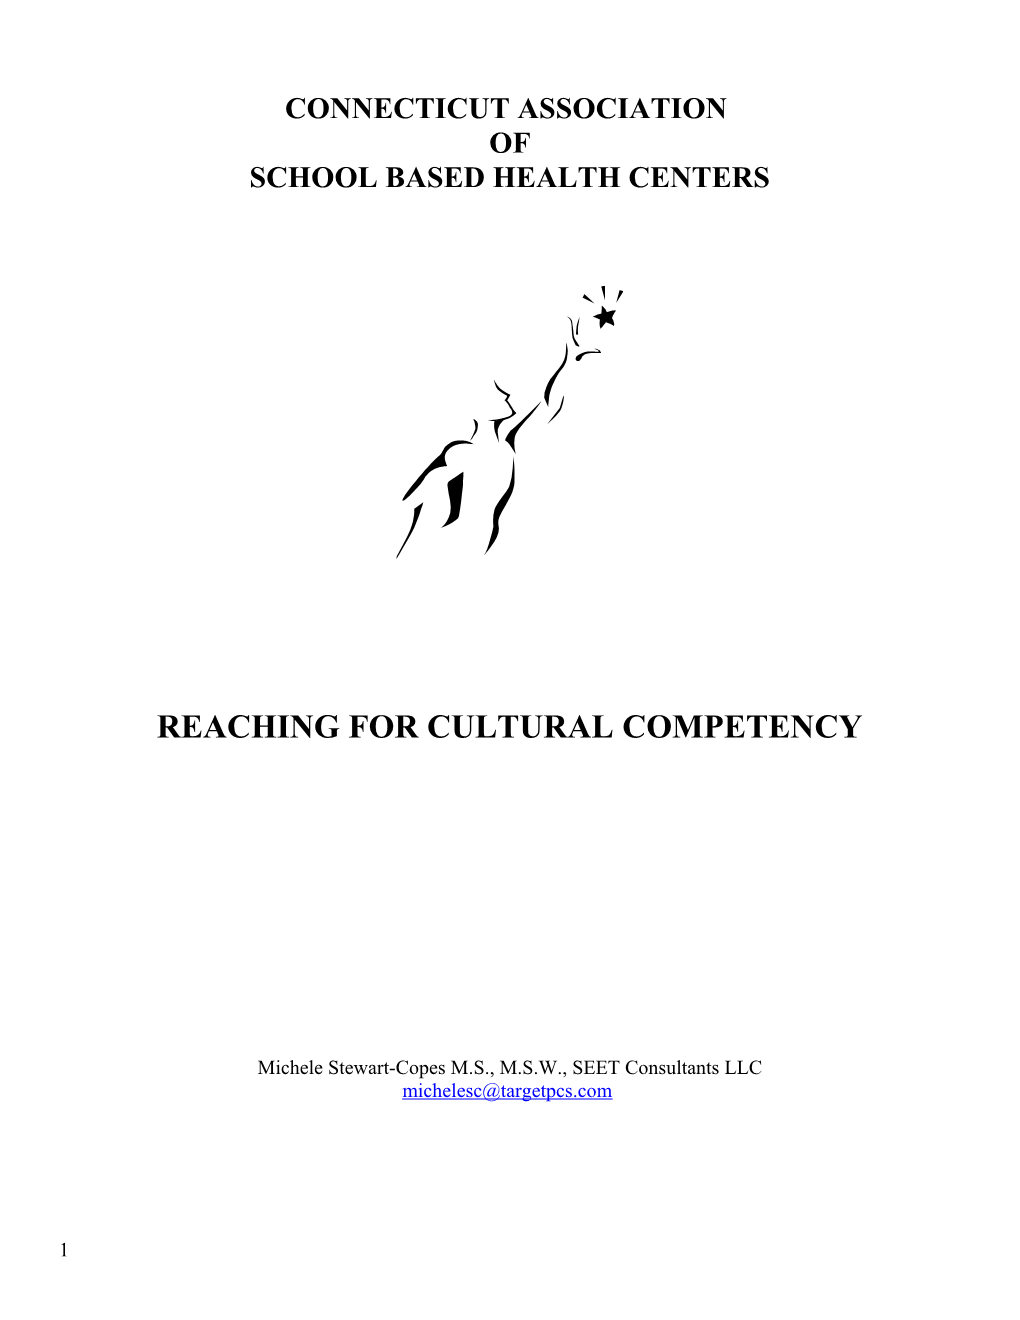 School Based Health Centers